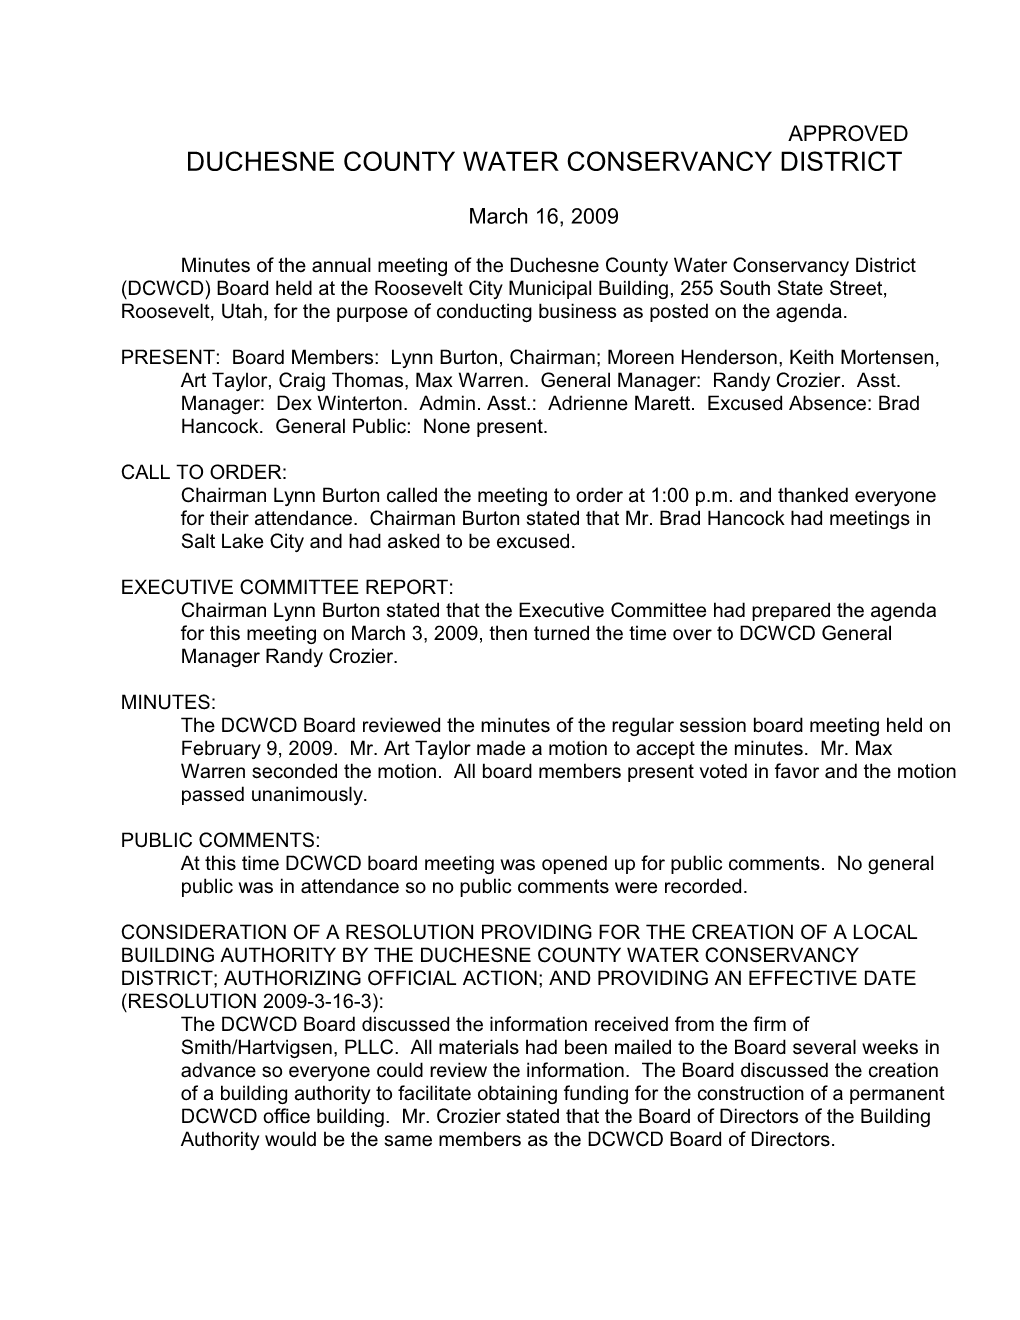 Duchesne County Water Conservancy District